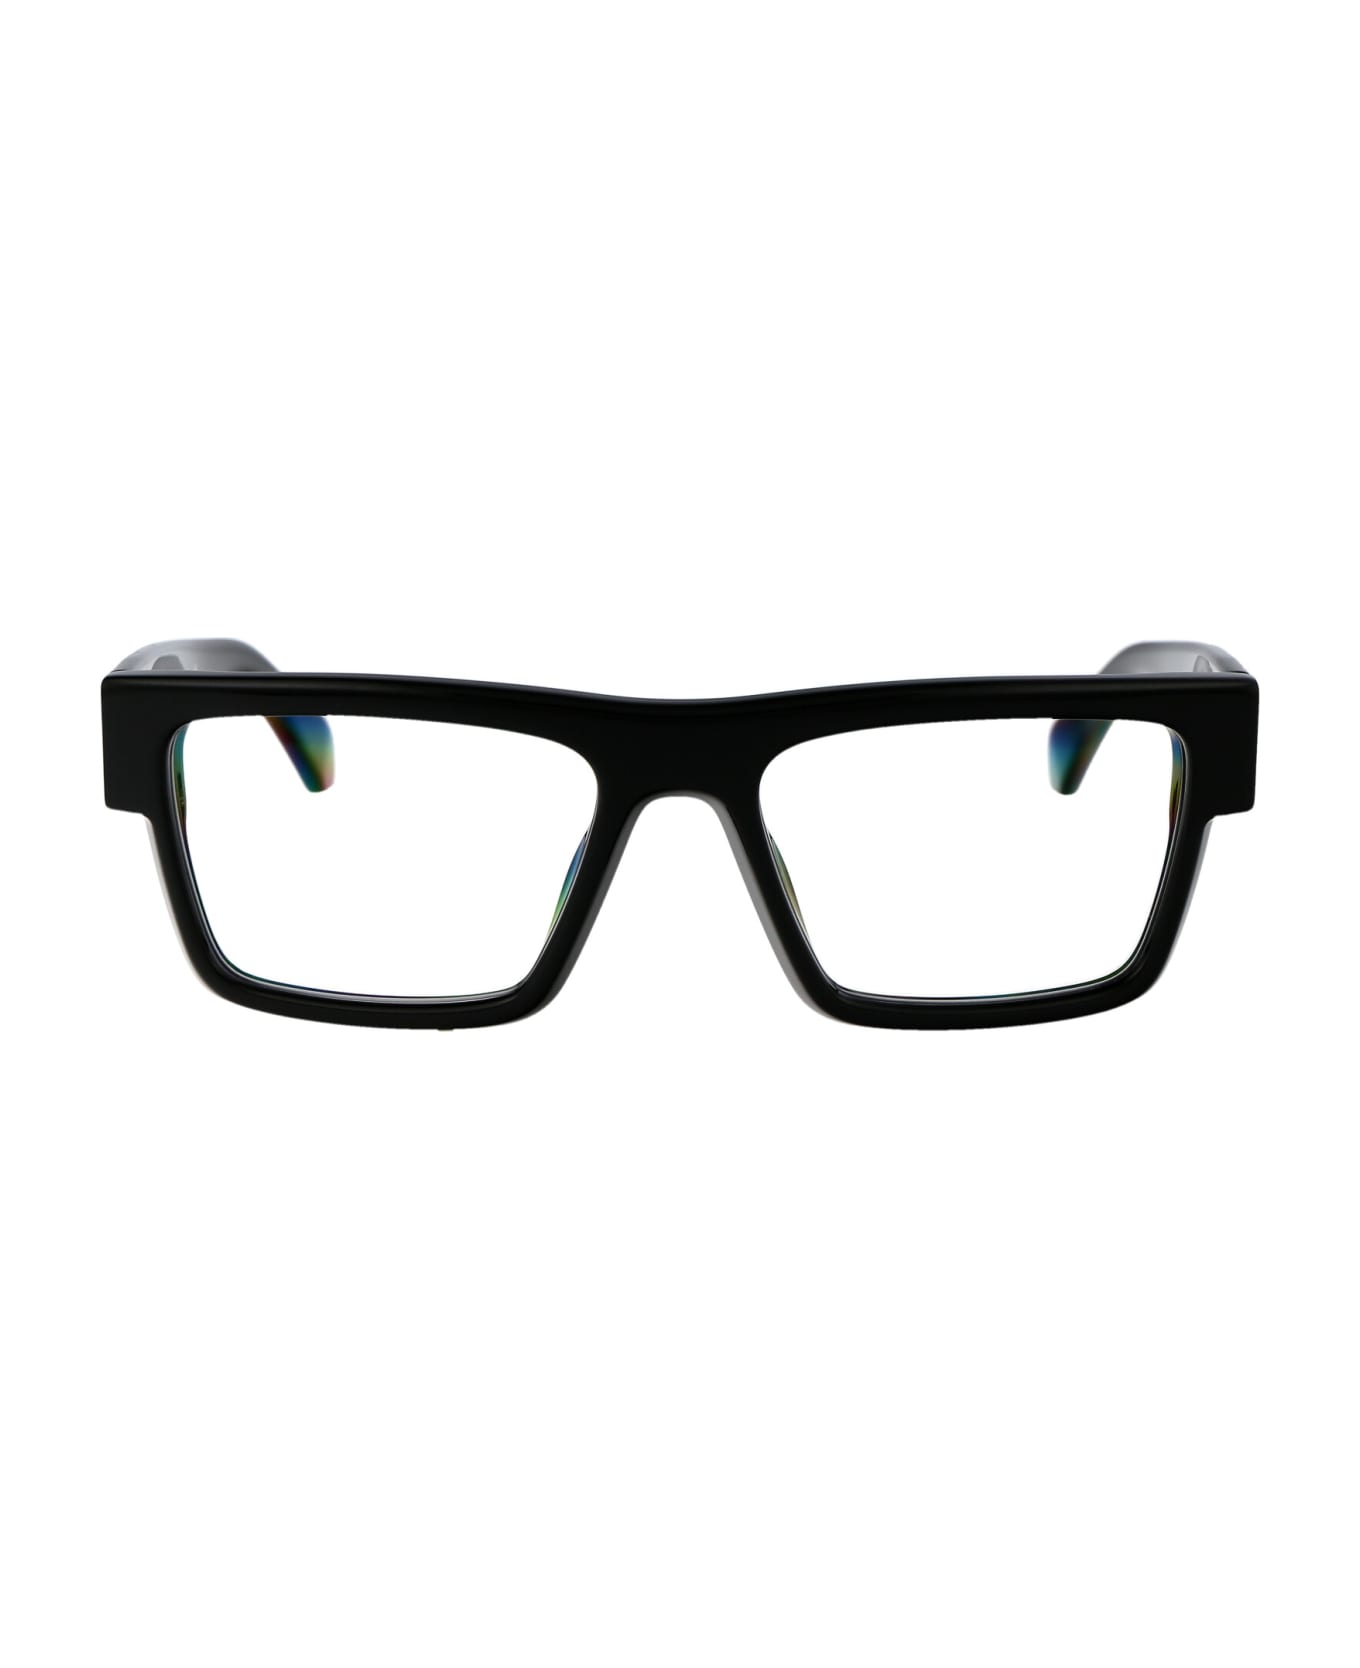 Off-White Optical Style 61 Glasses - 1000 BLACK